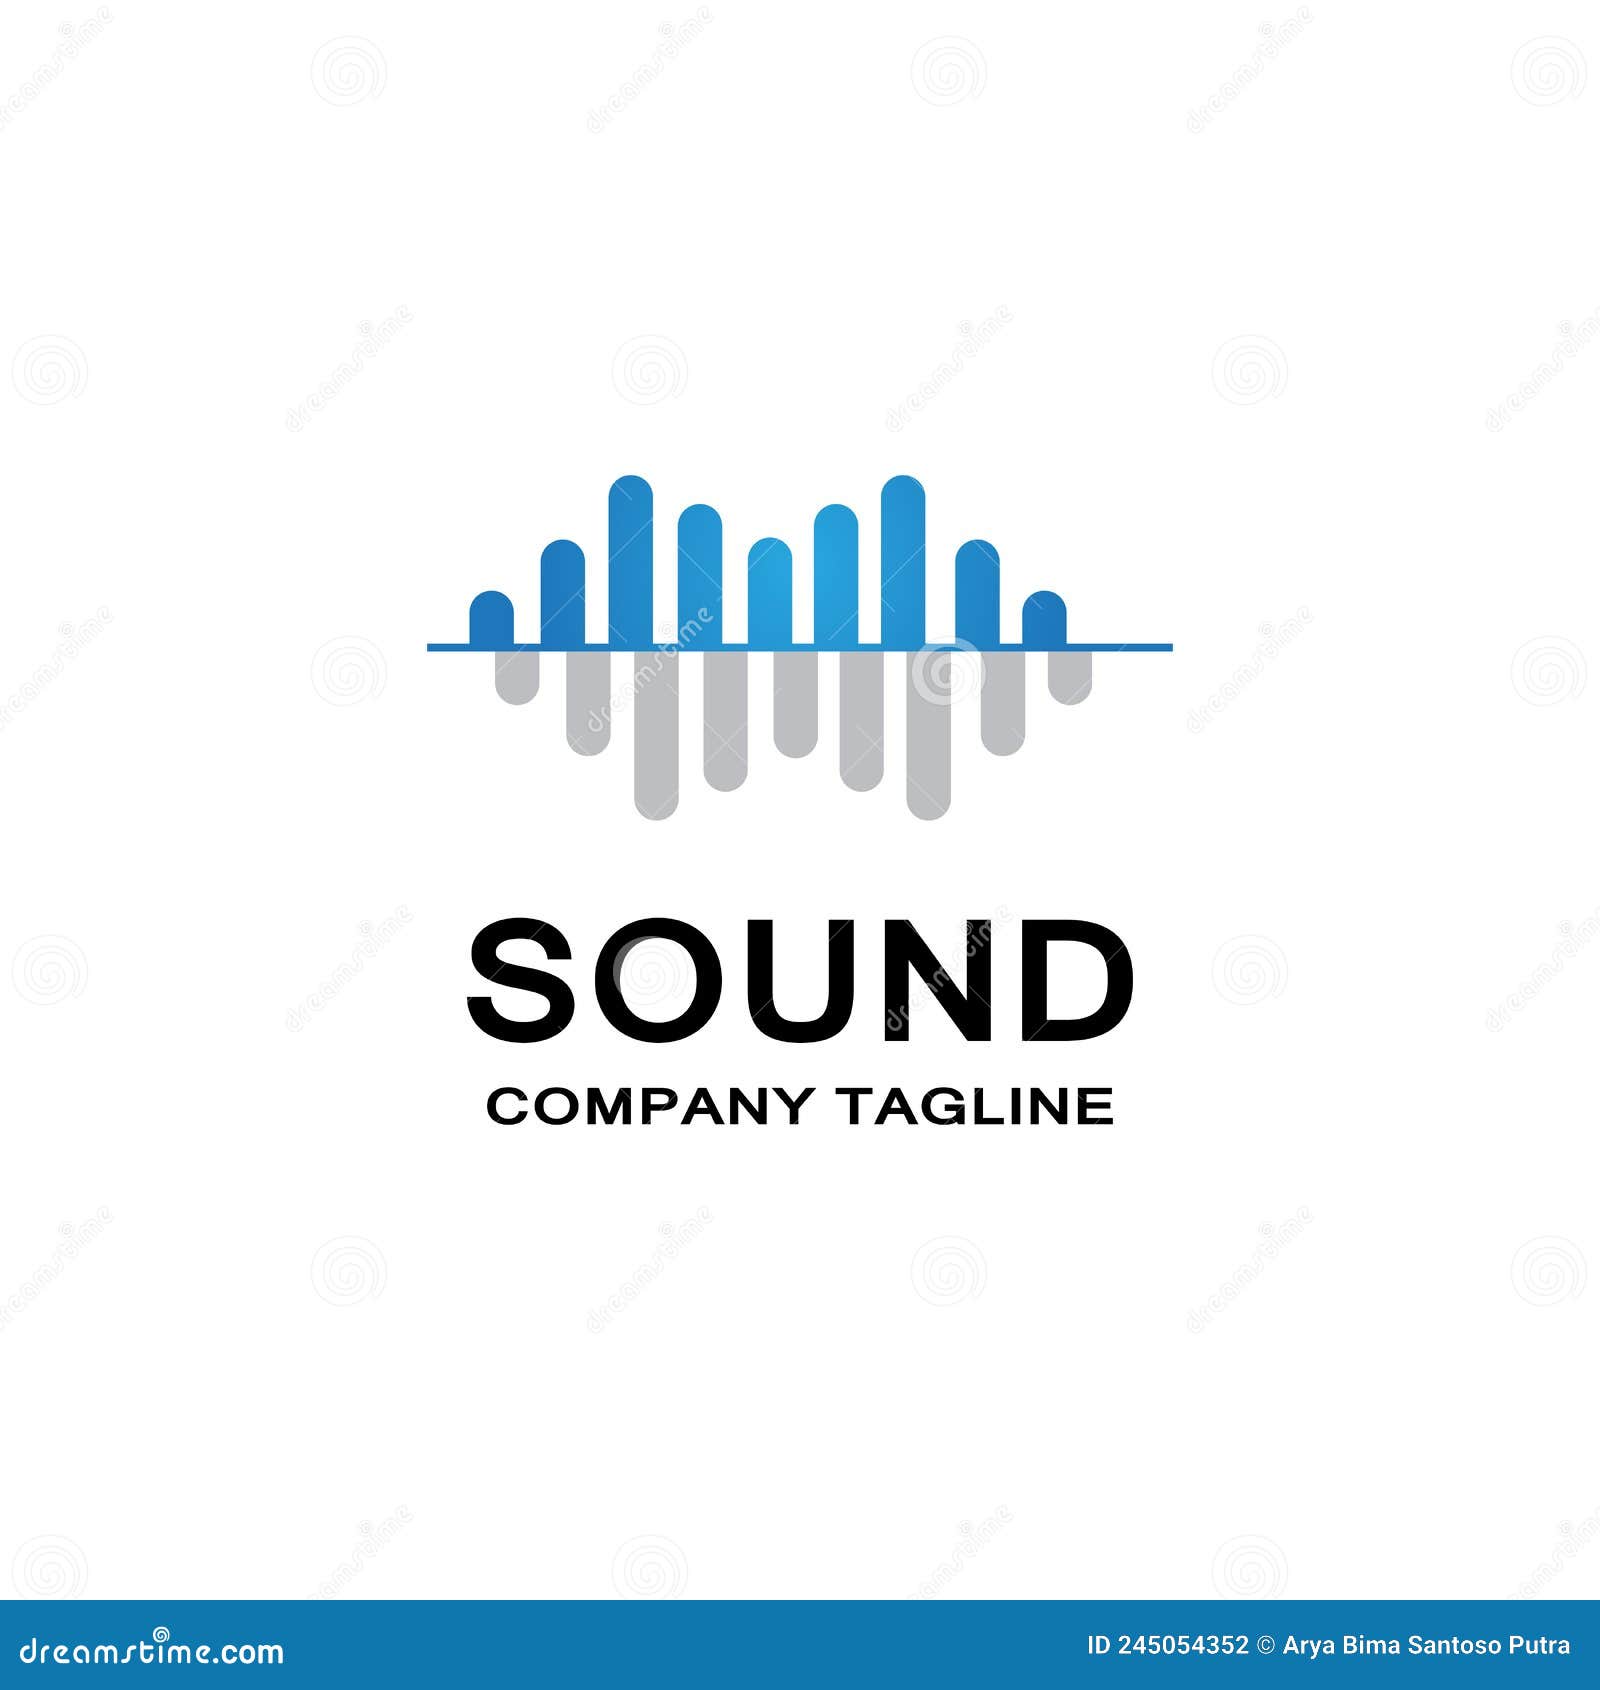 Update more than 200 sound wave logo super hot